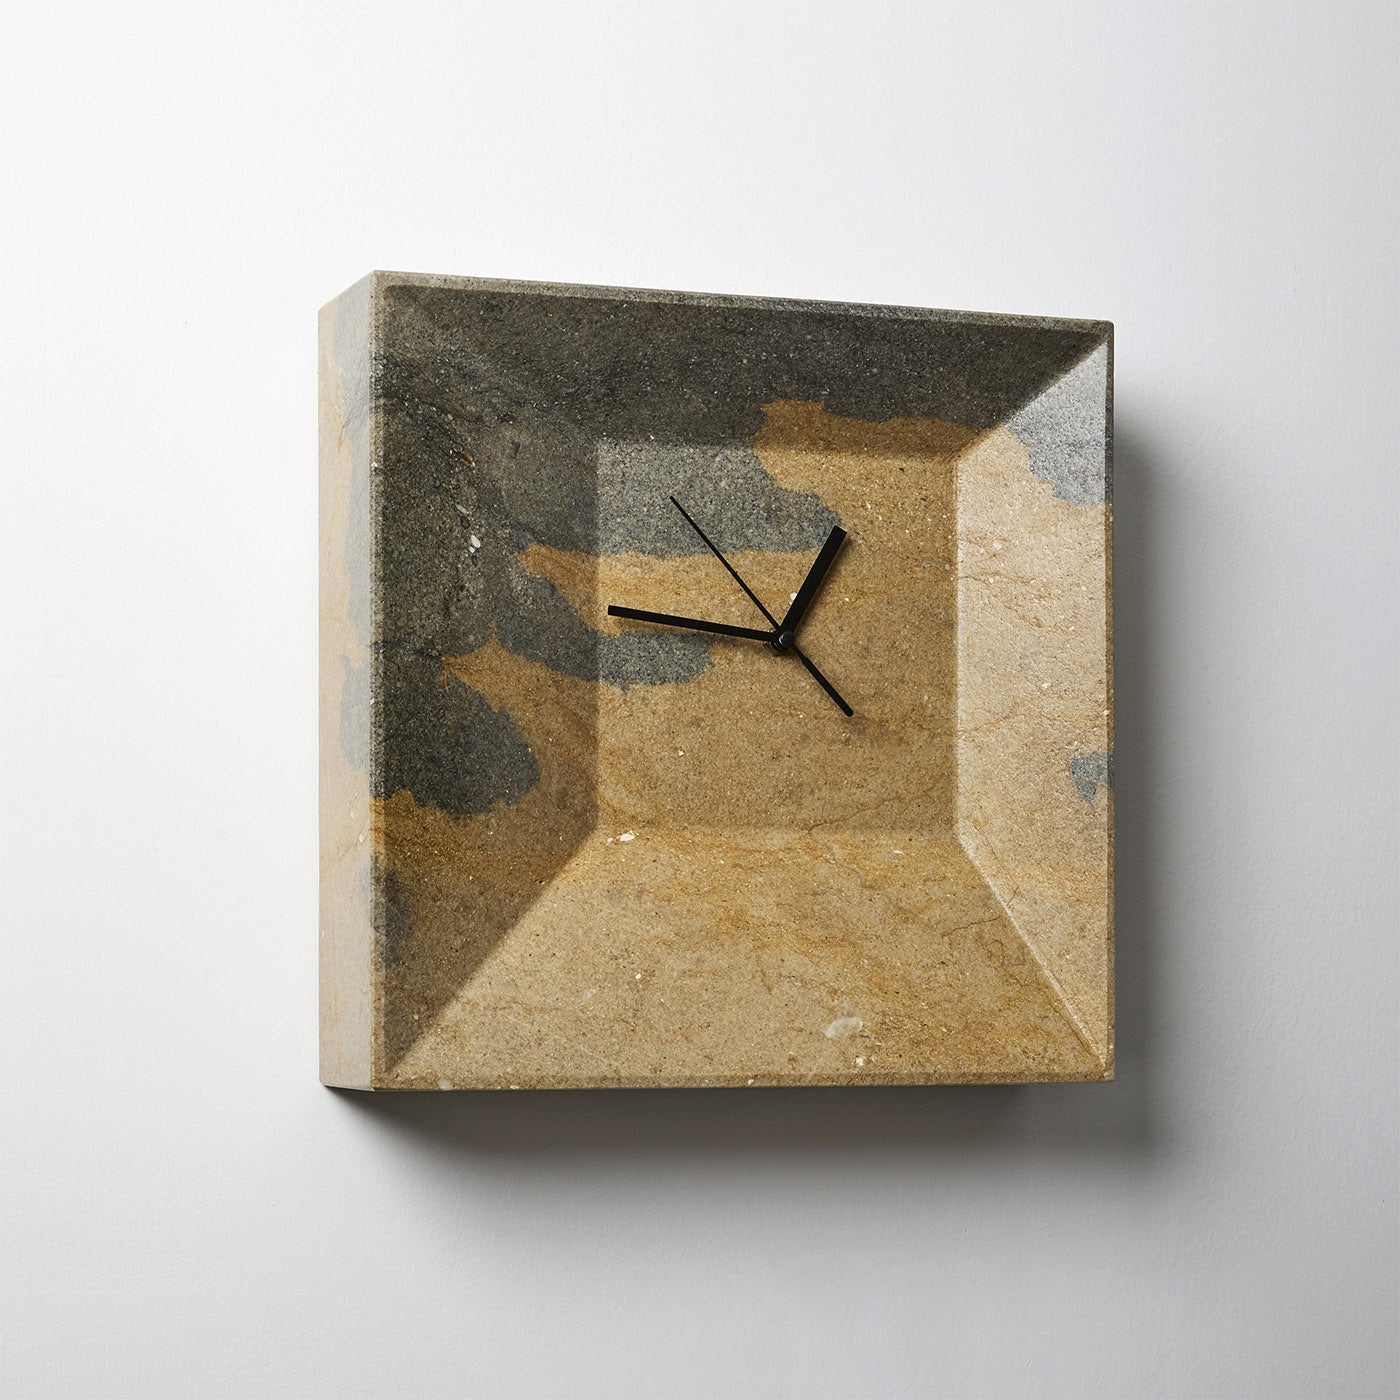 Pietro Table/Wall Clock by Cristian Visentin - Alternative view 3